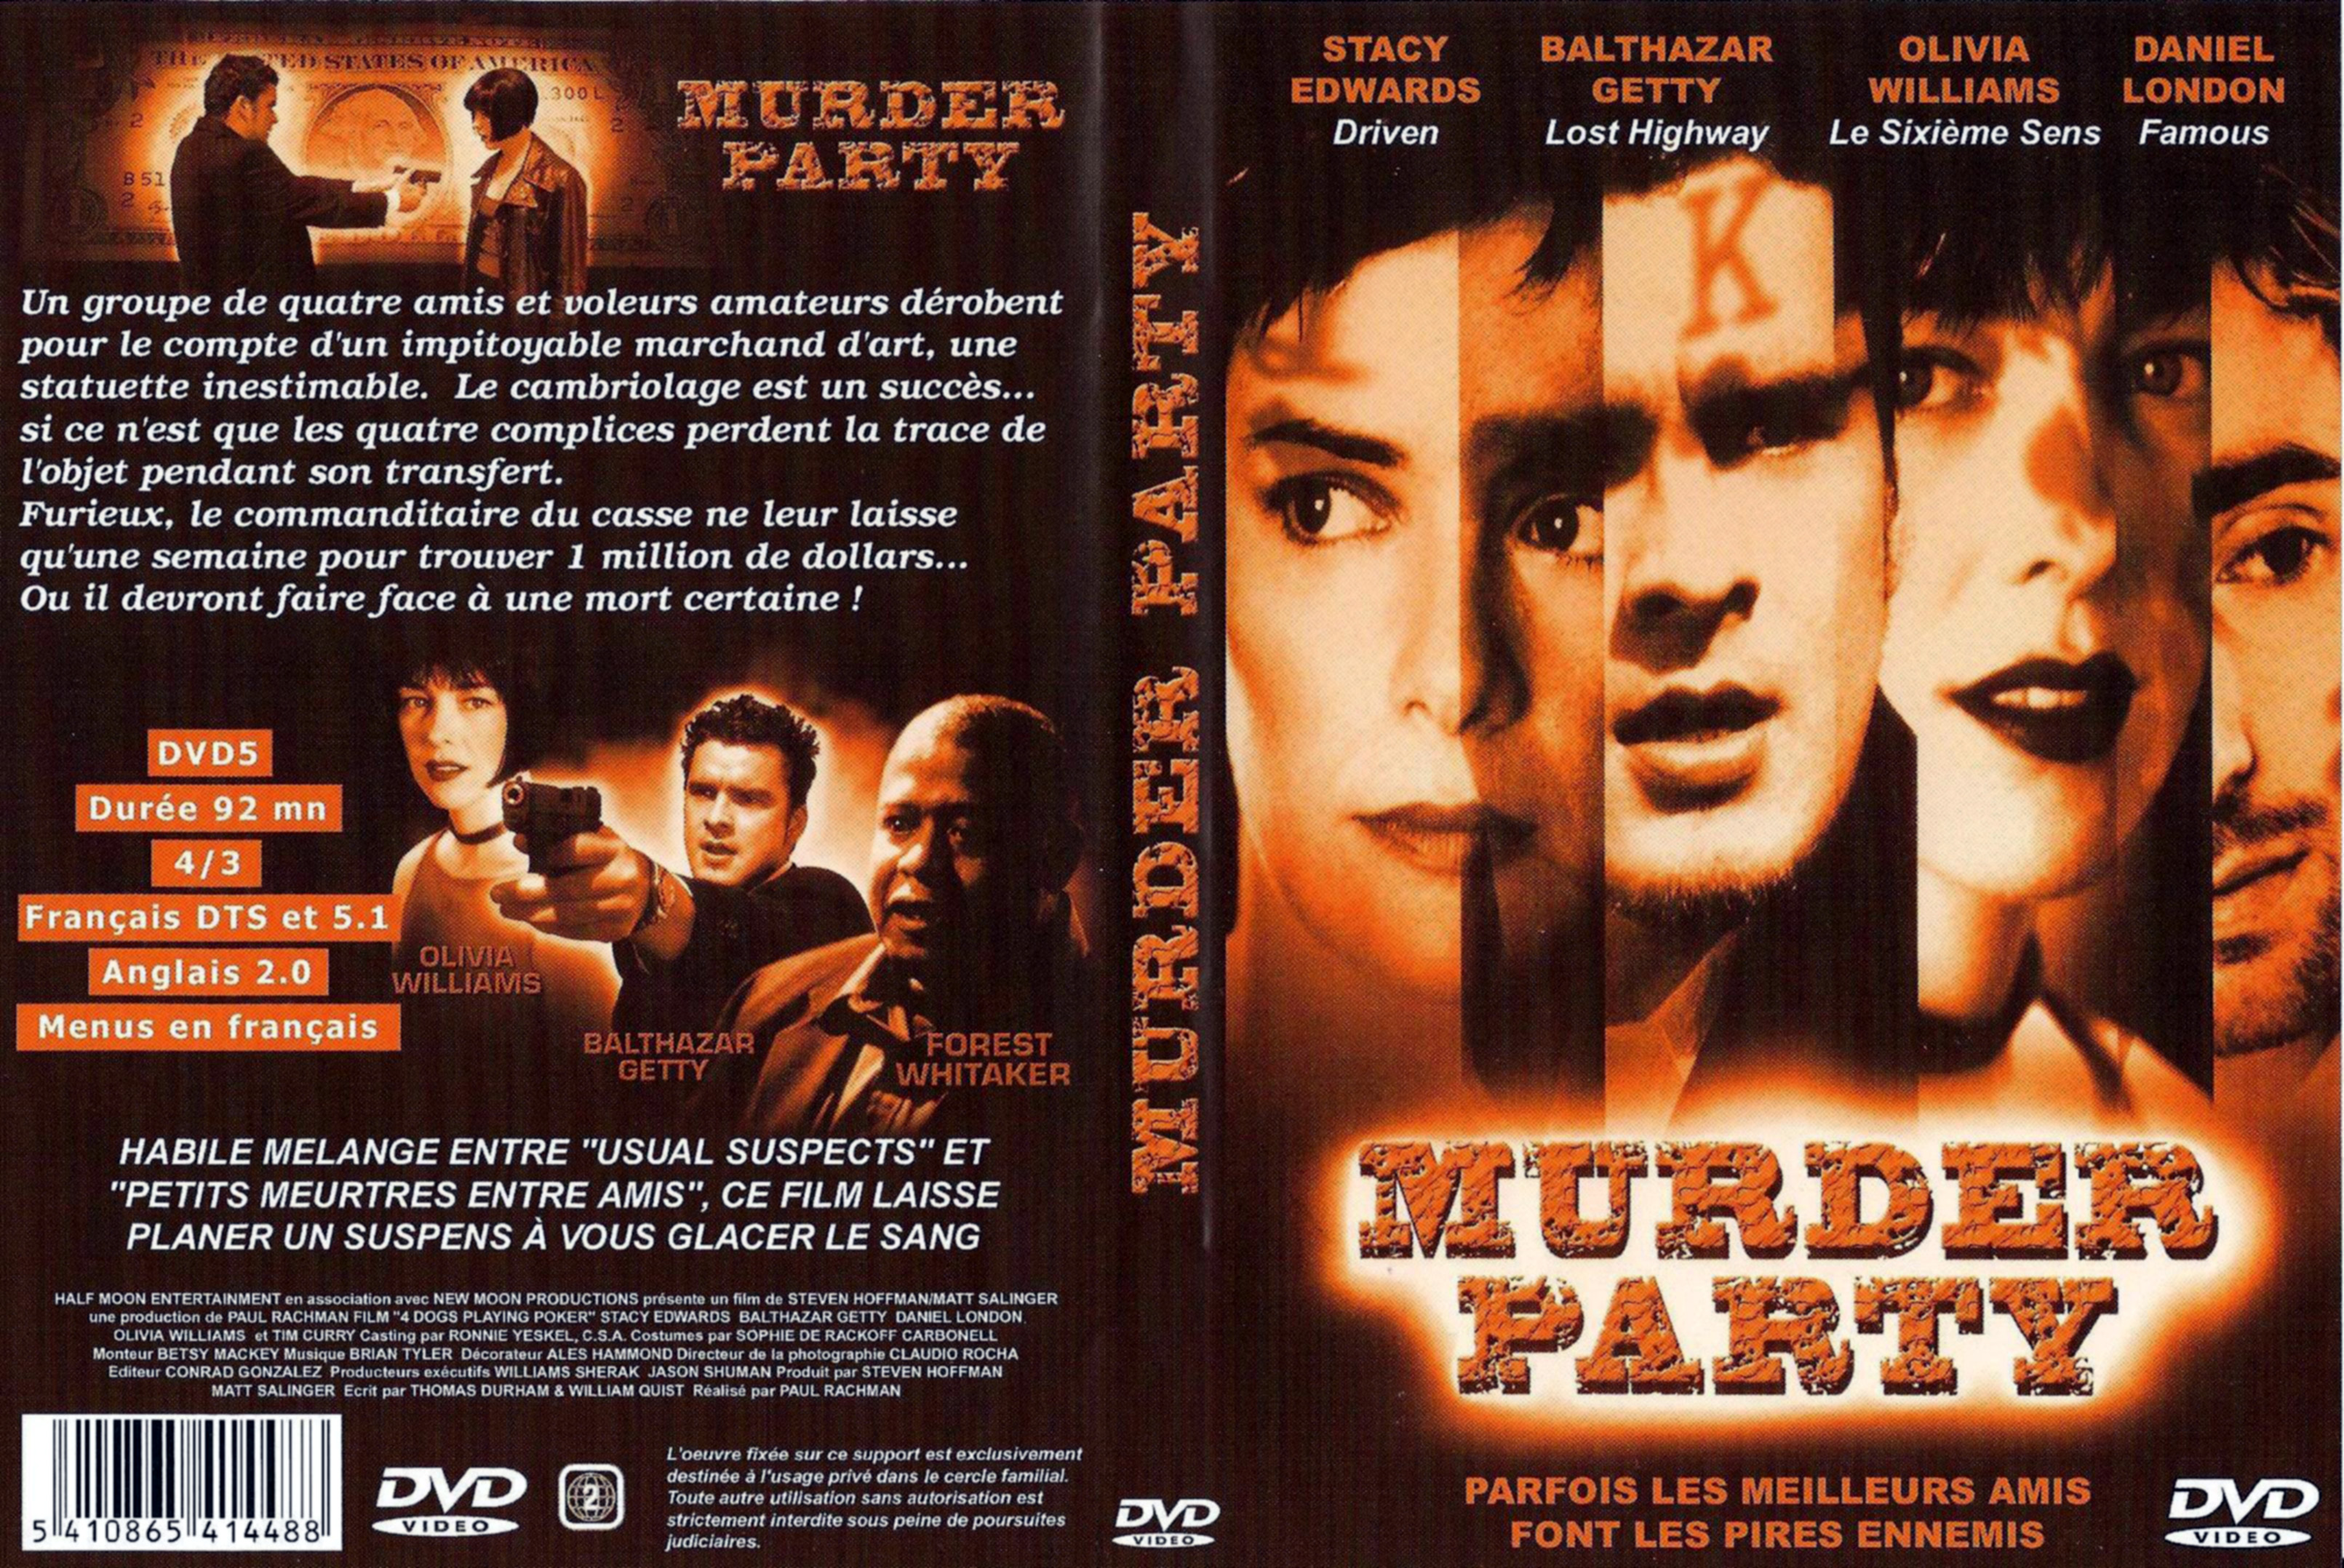 Jaquette DVD Murder party